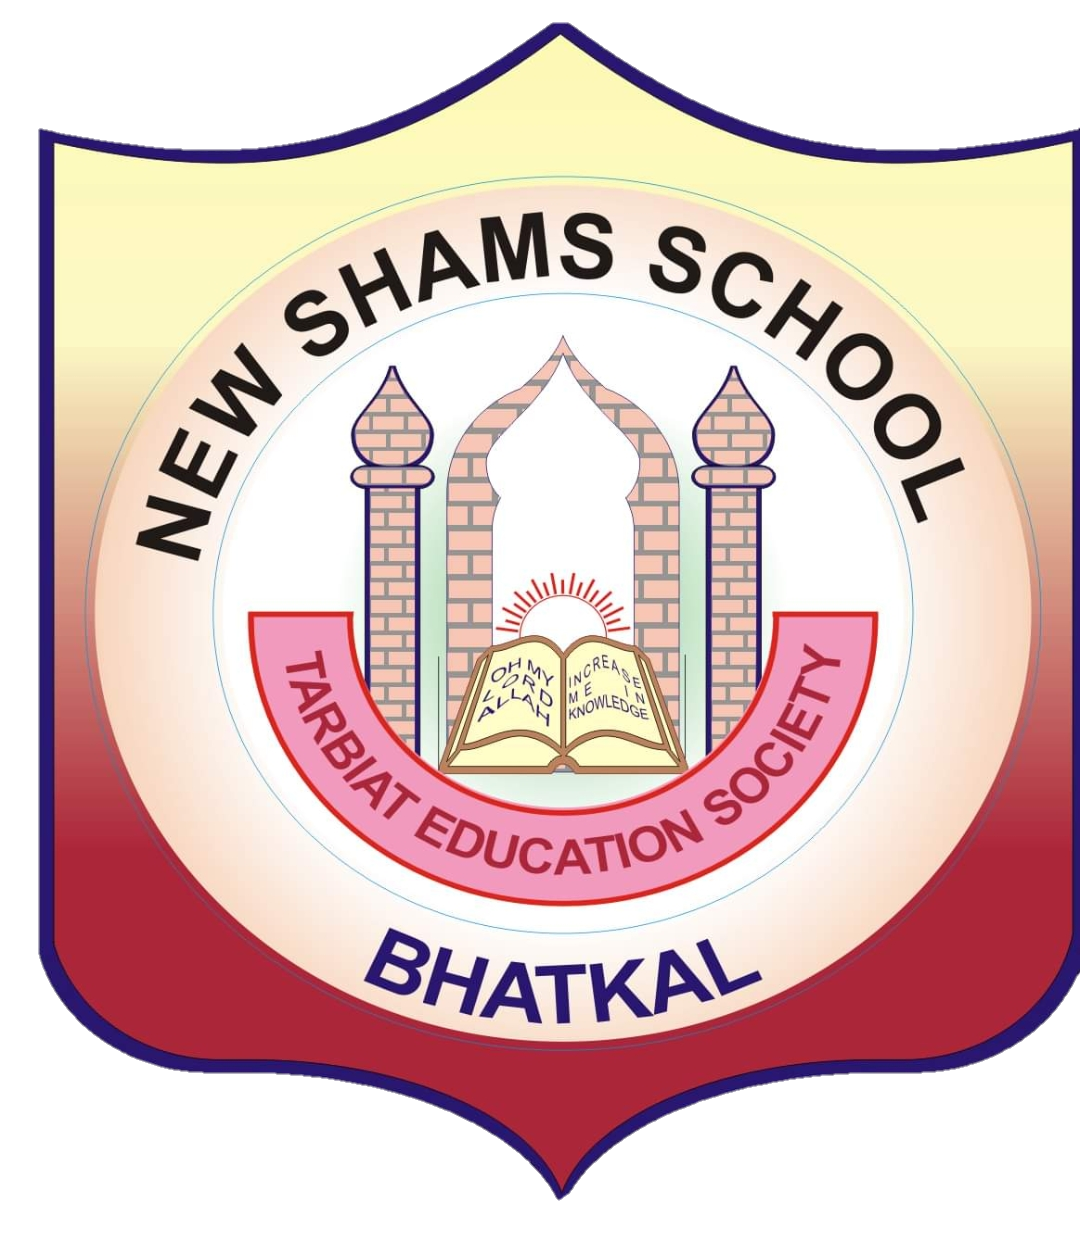 NEW SHAMS SCHOOL